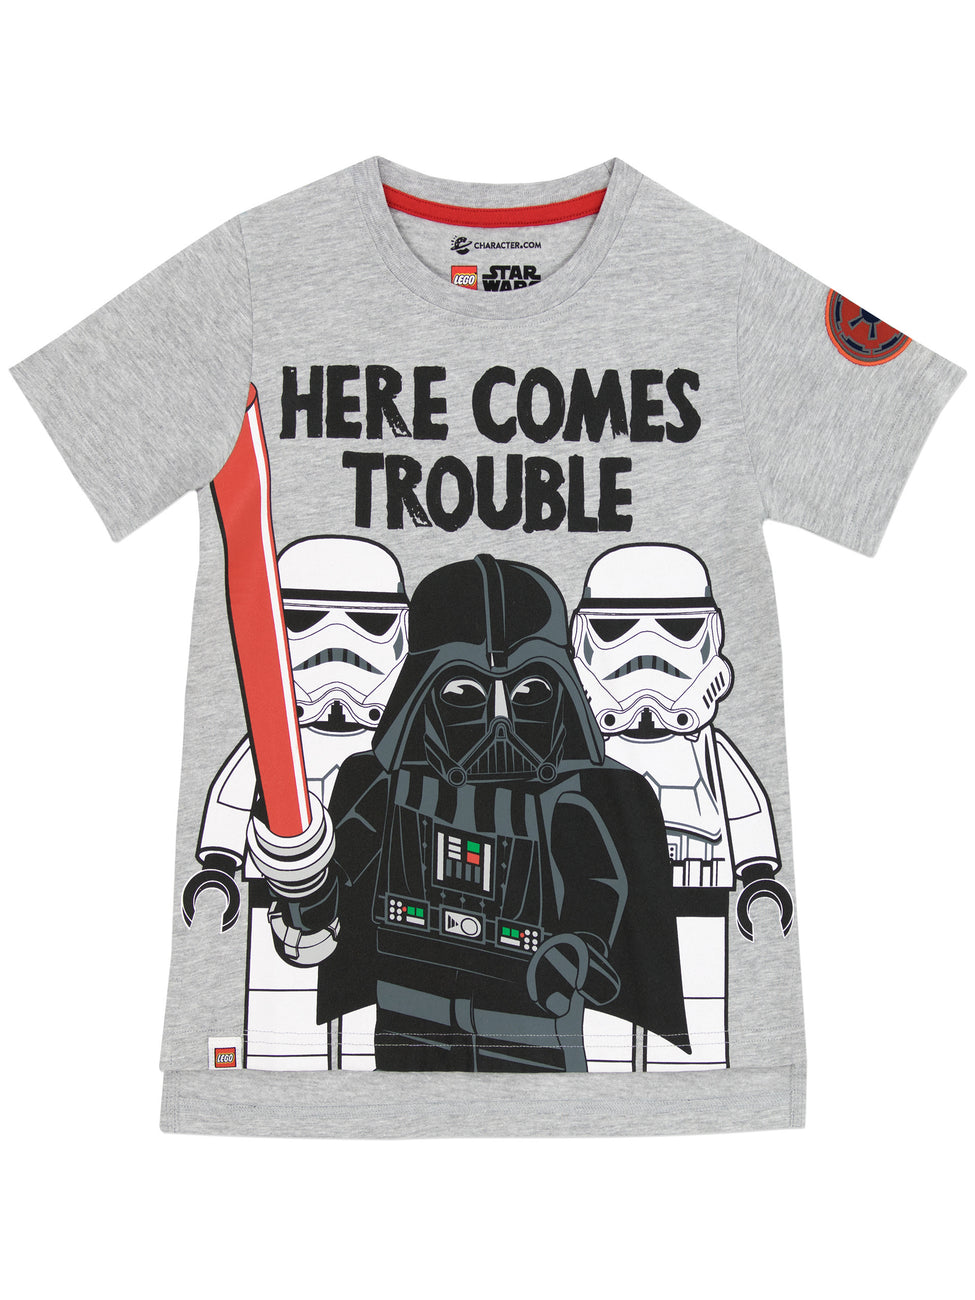 Buy Lego Star Wars T-Shirt | Kids | Character.com Official Merchandise